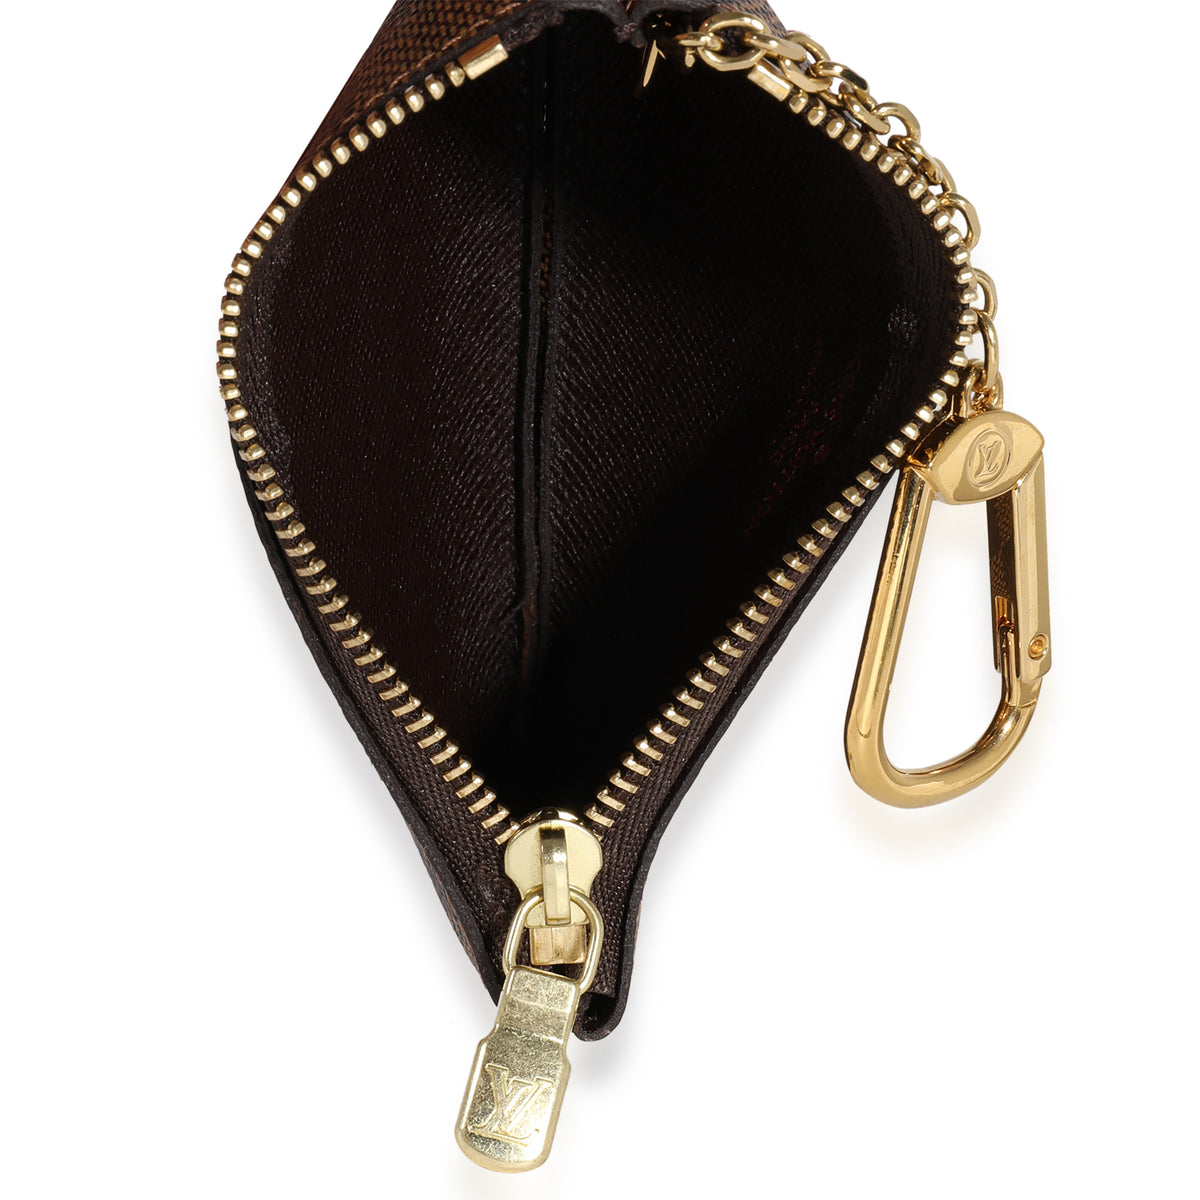 Louis Vuitton's New Bags Draw Inspiration from Tennis - PurseBlog